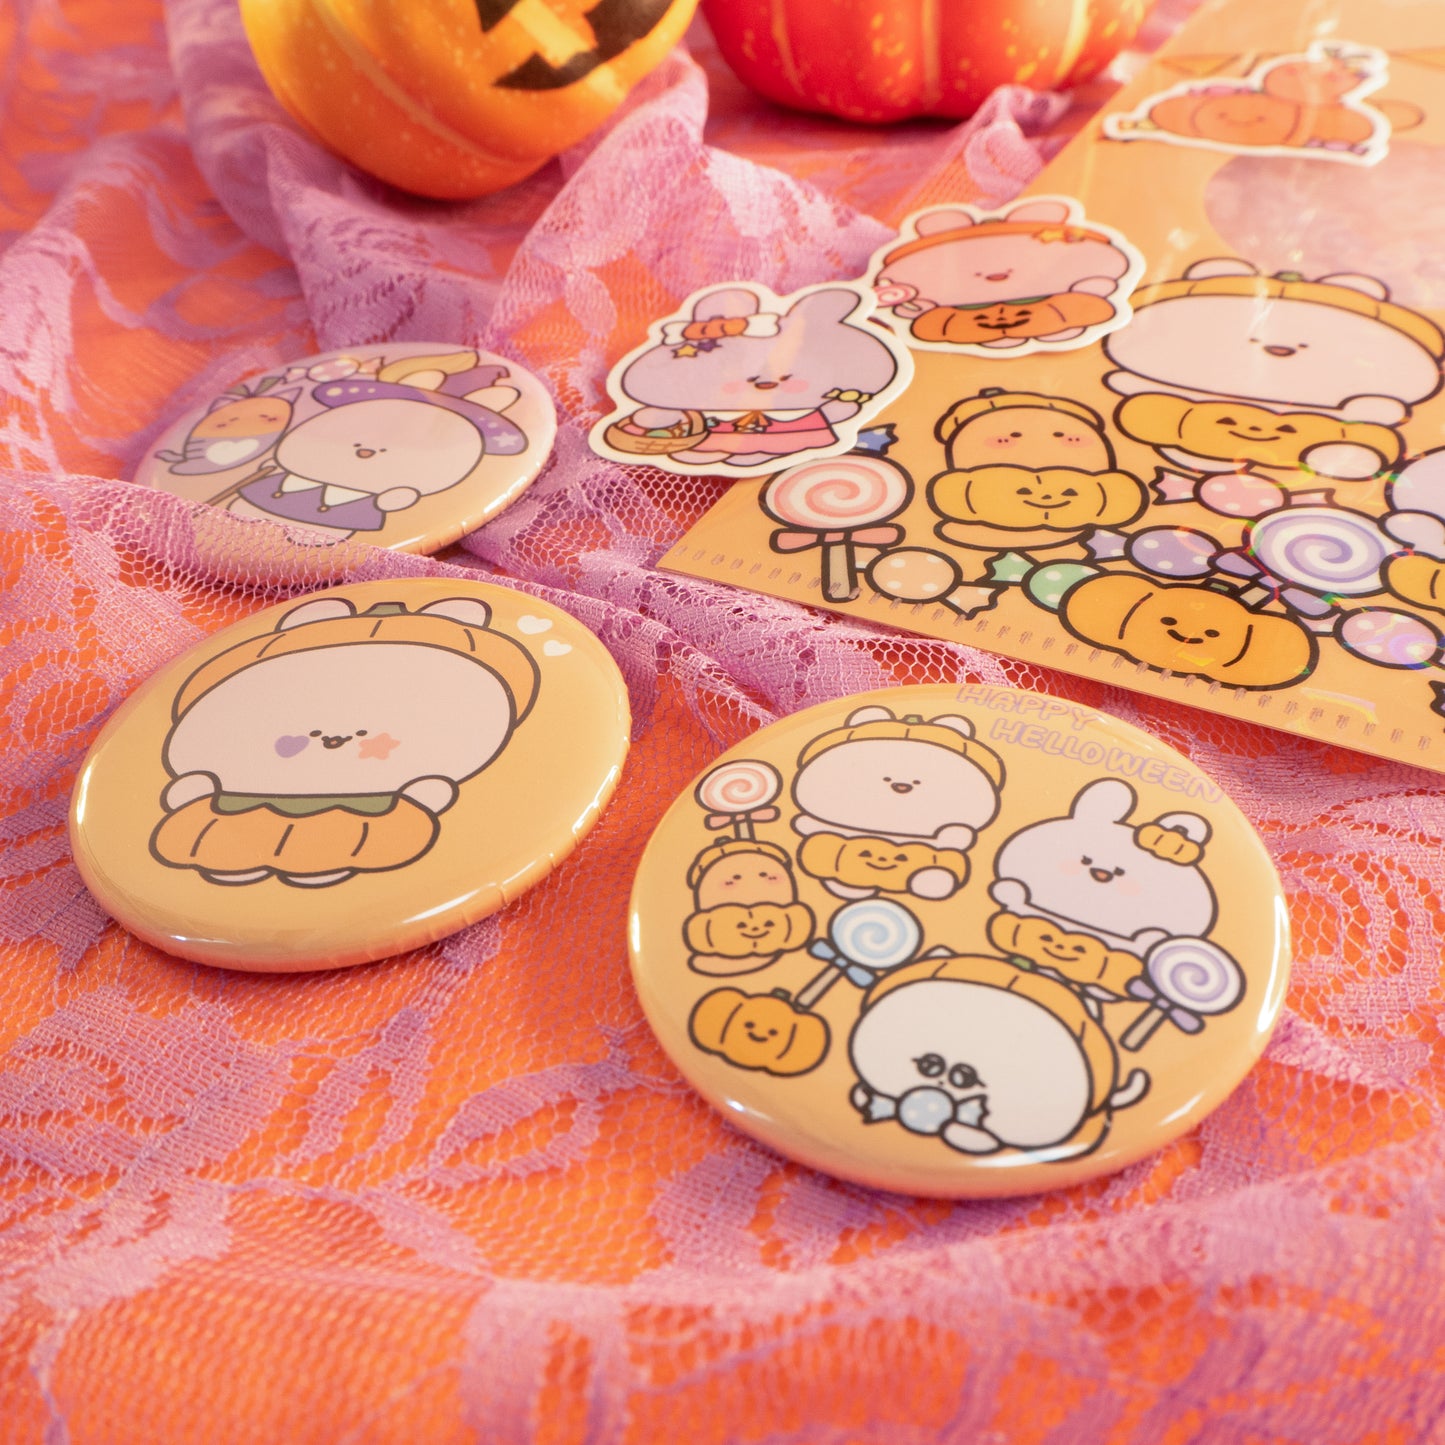 [Asamimi-chan] Happy Halloween random tin badge (all 3 types) [shipped in late October]